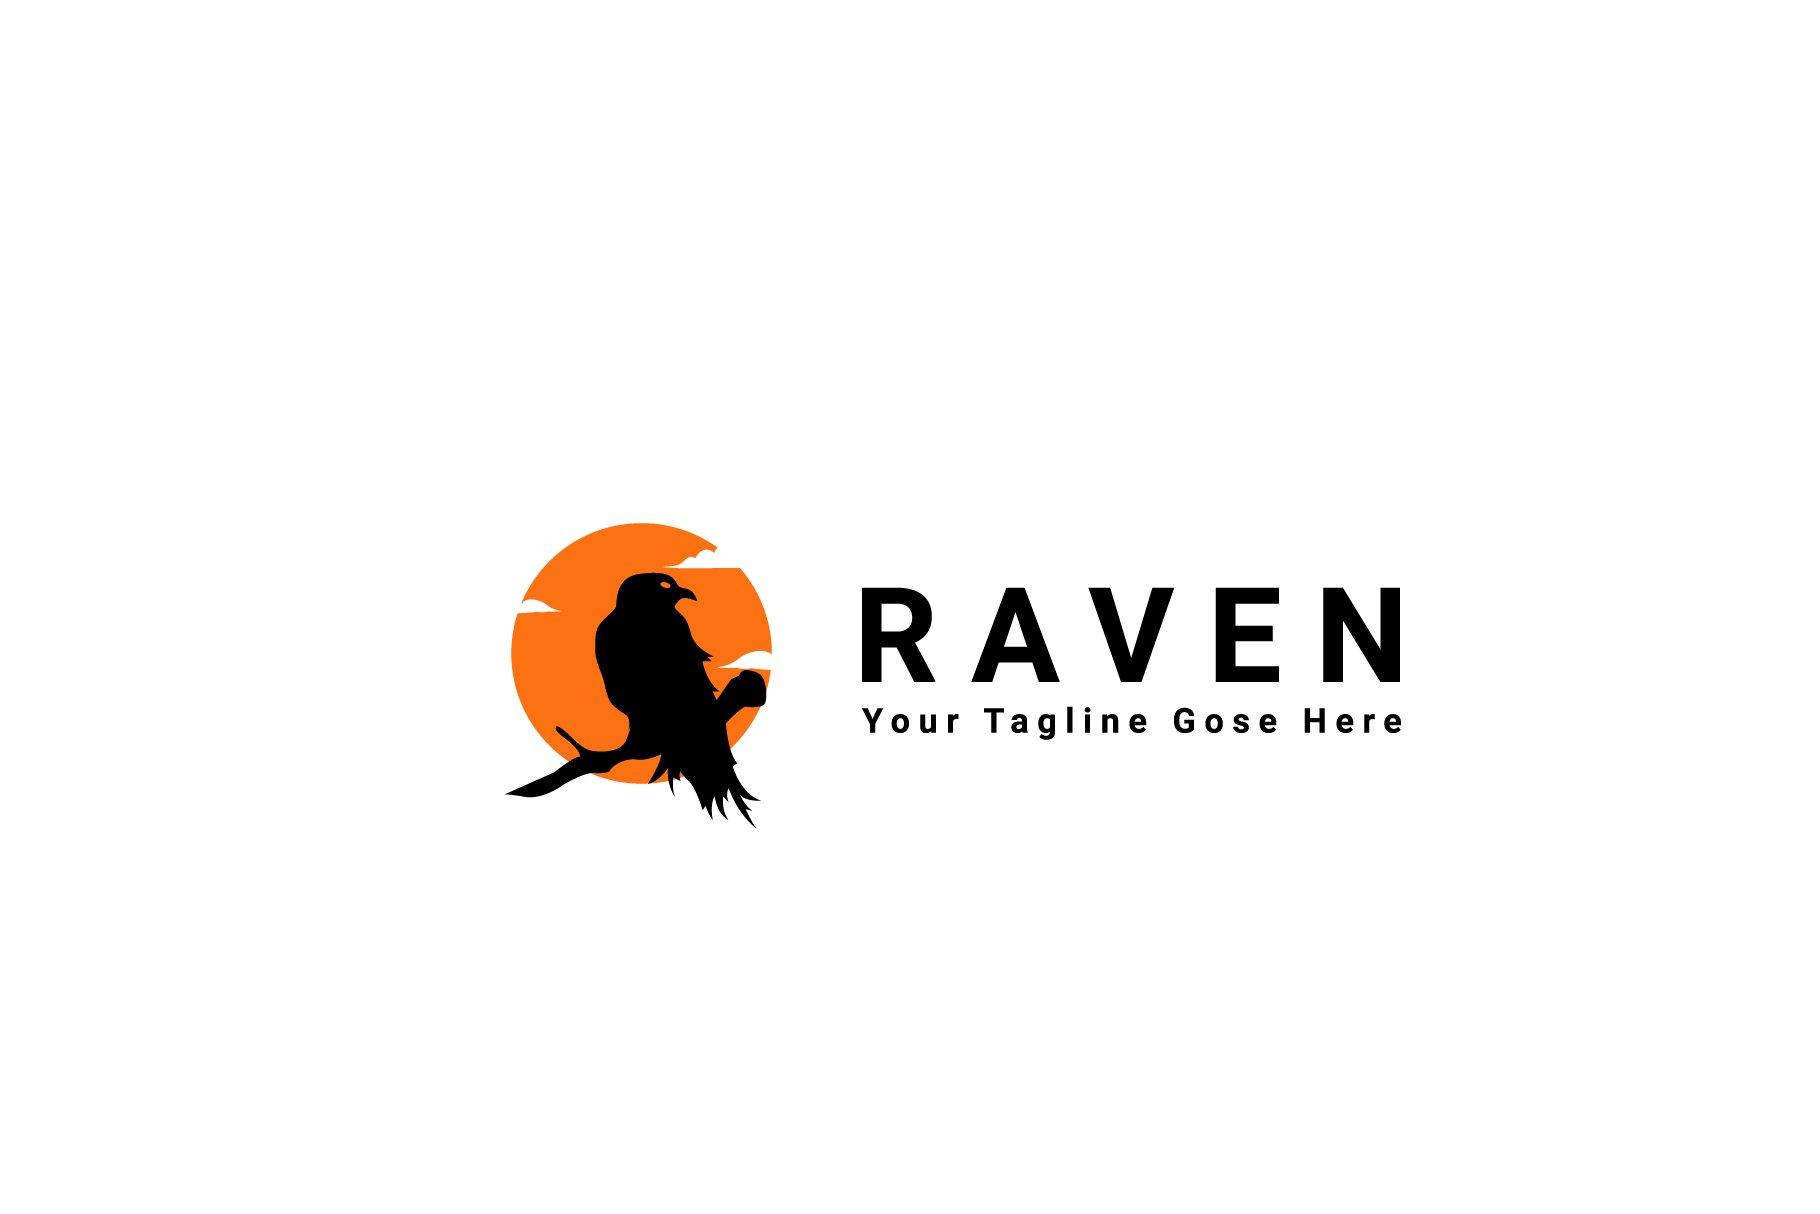 raven logo design cover image.